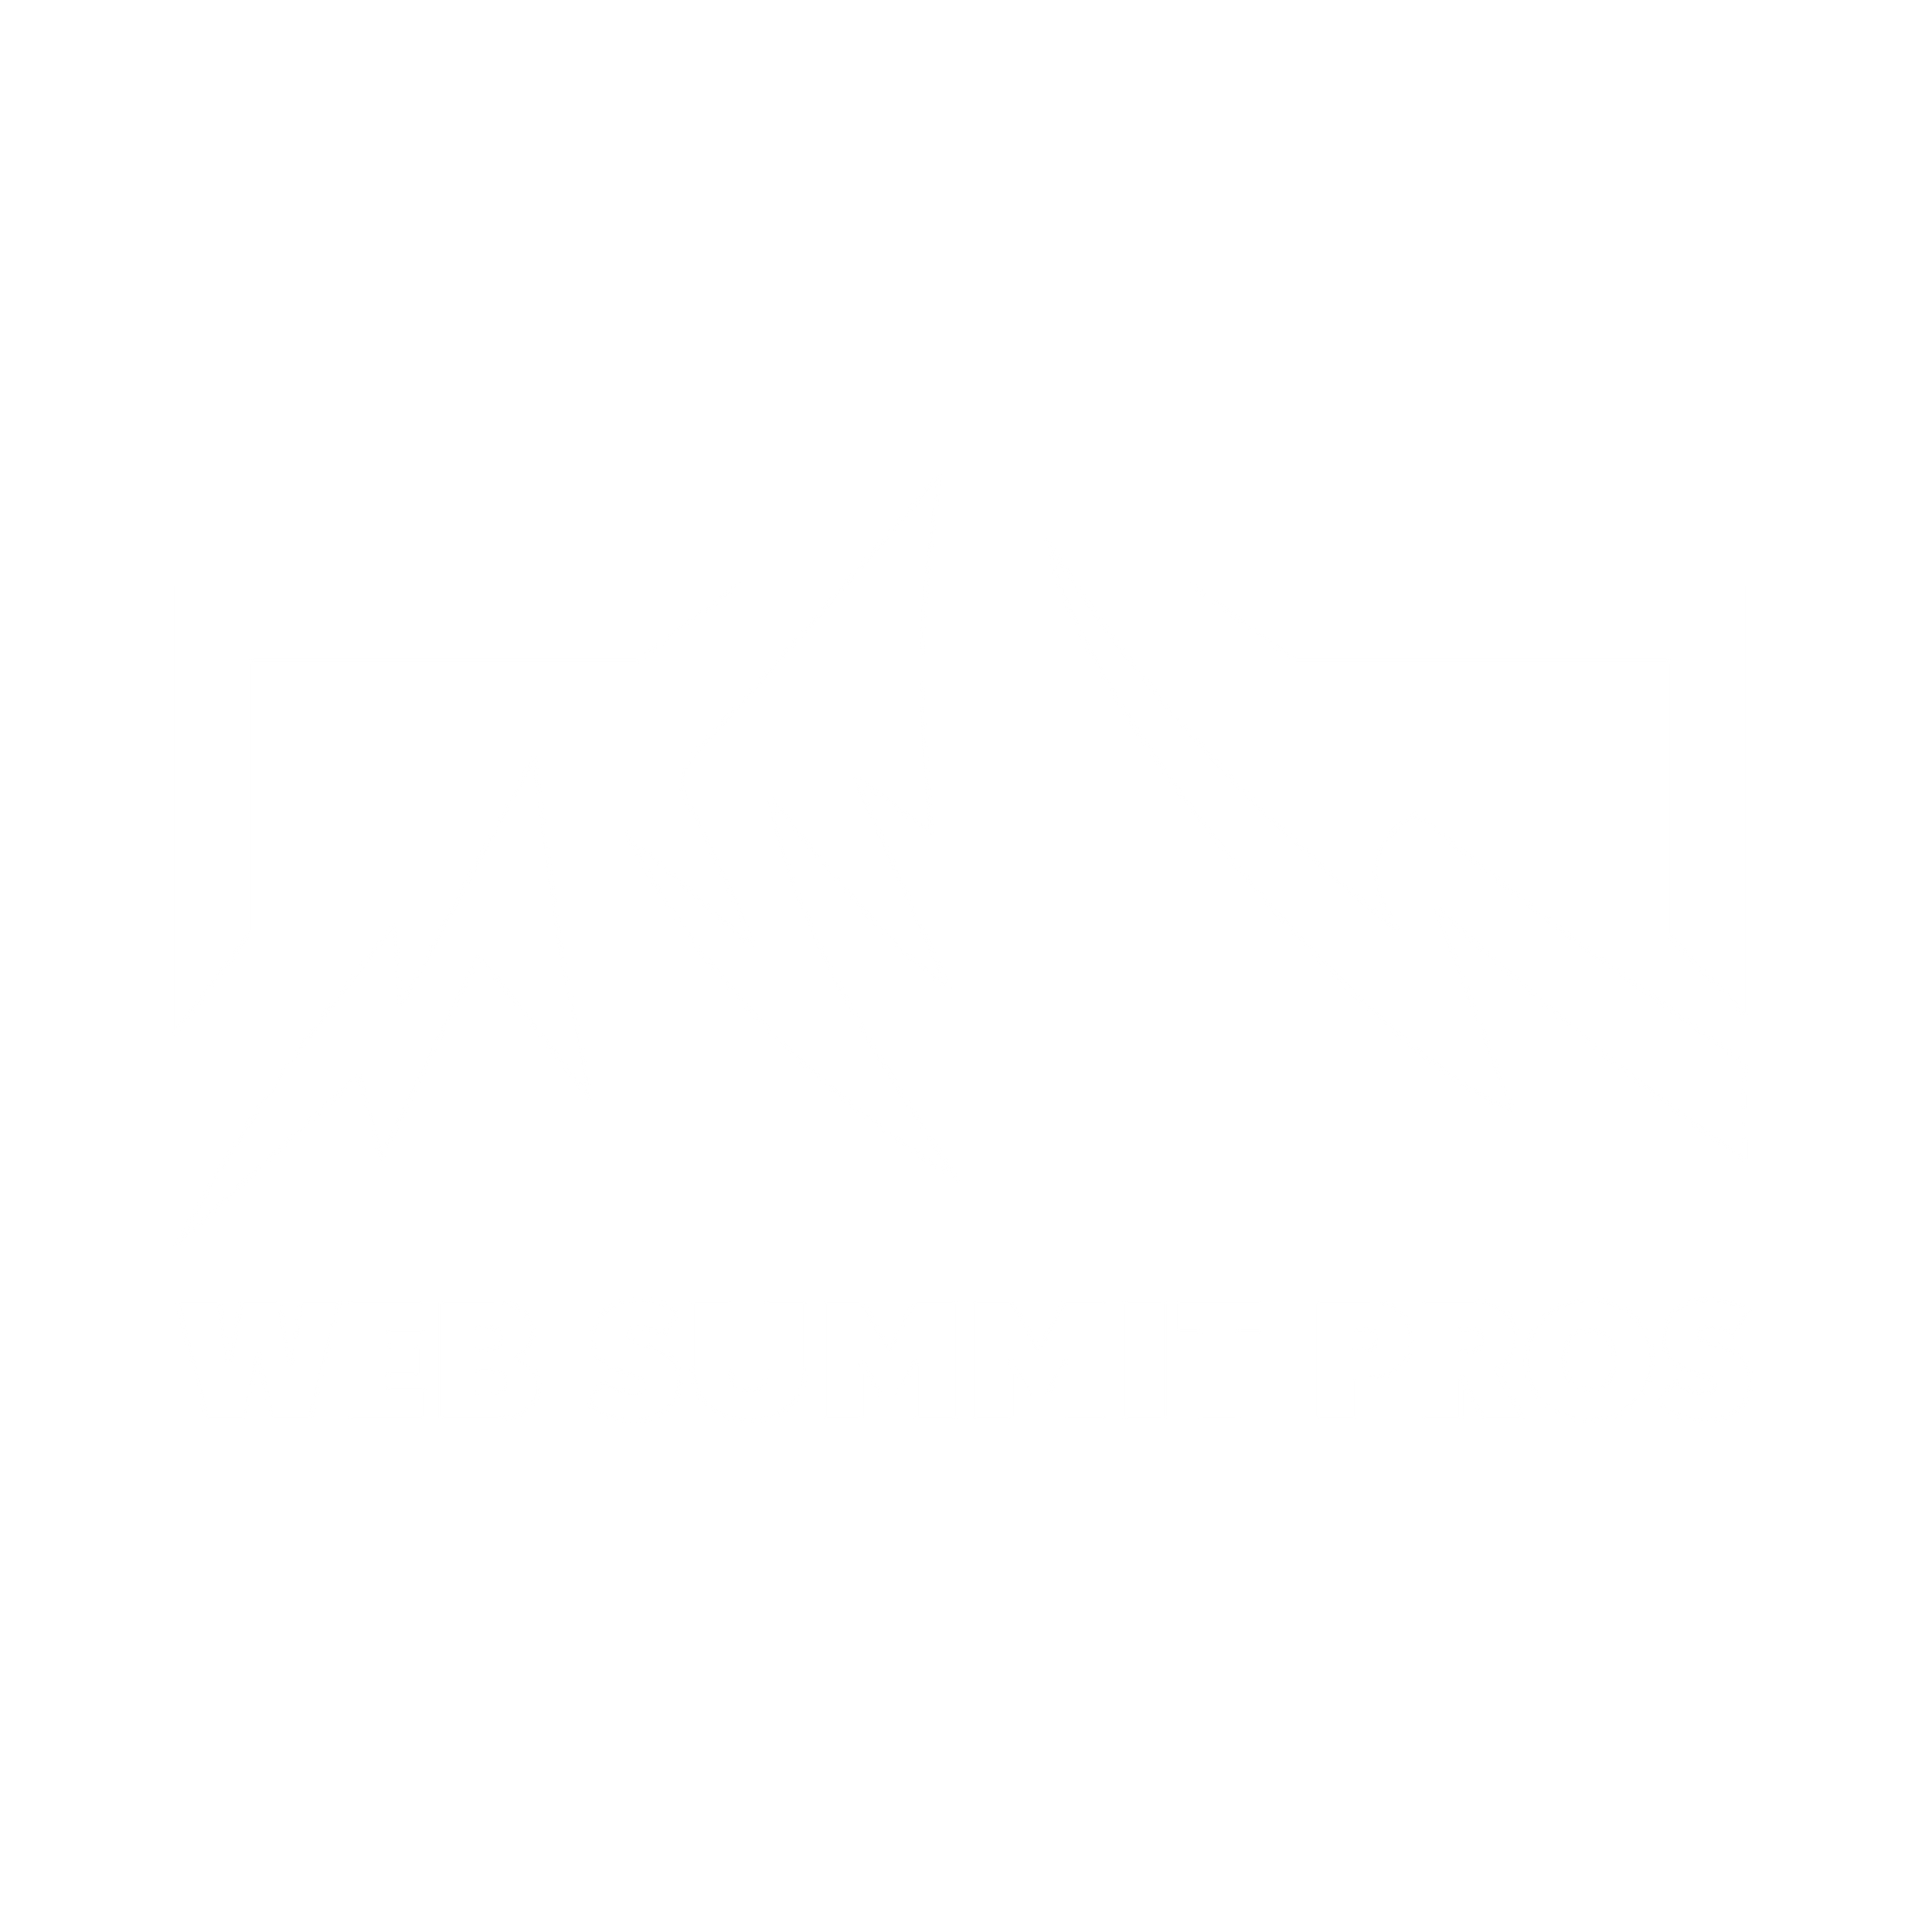 web summit pros, website design, website designer, seo services, lead generation